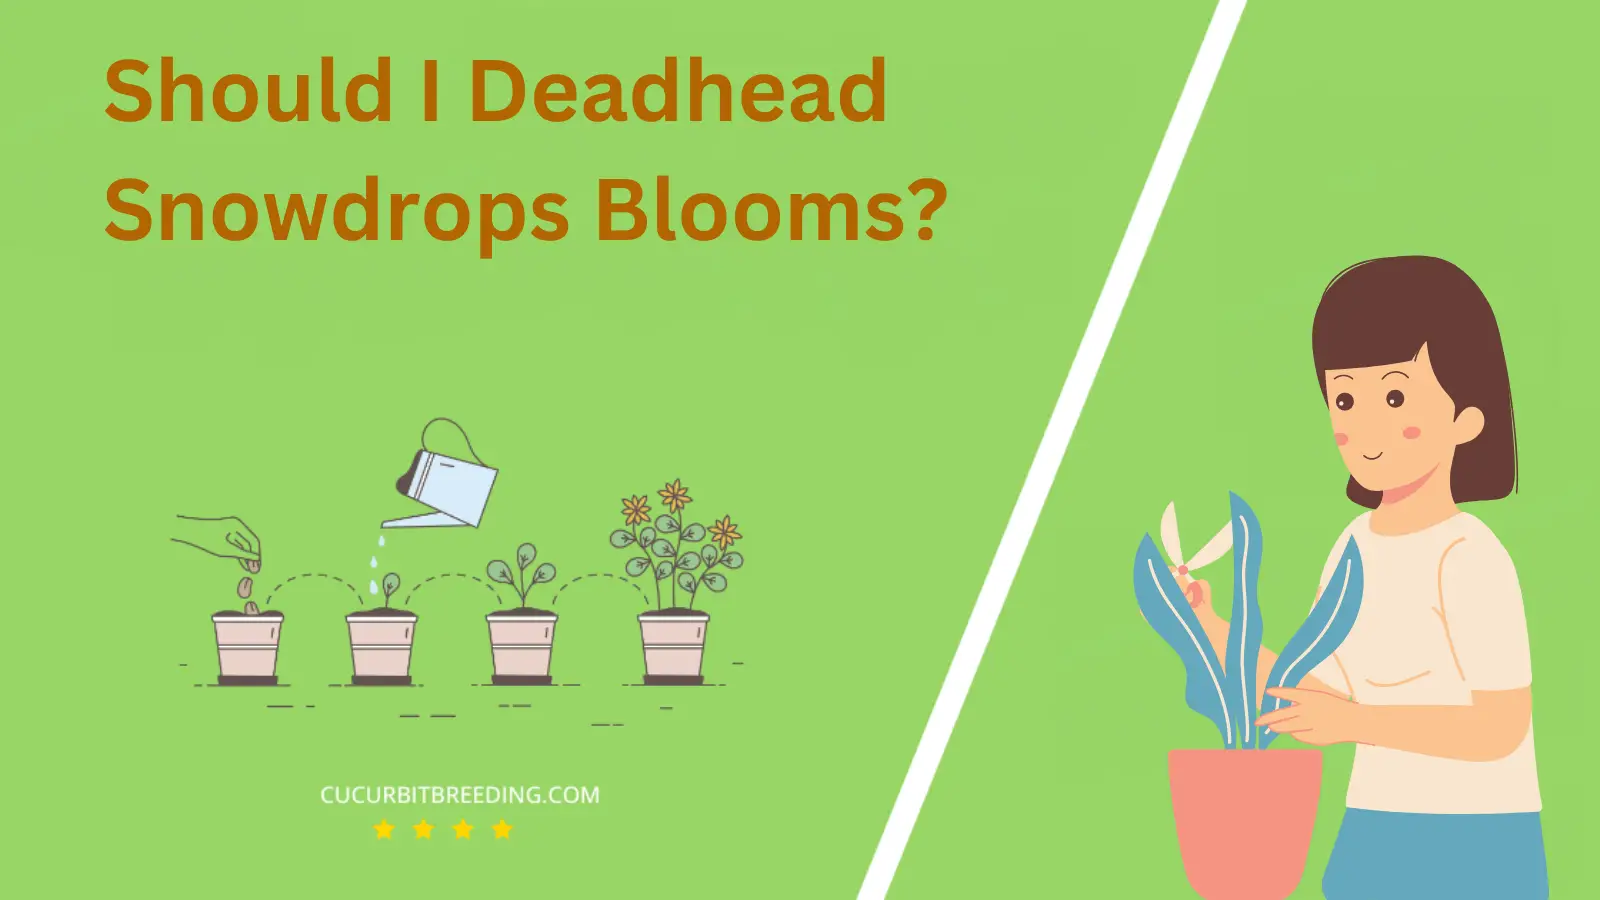 Should I Deadhead Snowdrops Blooms?